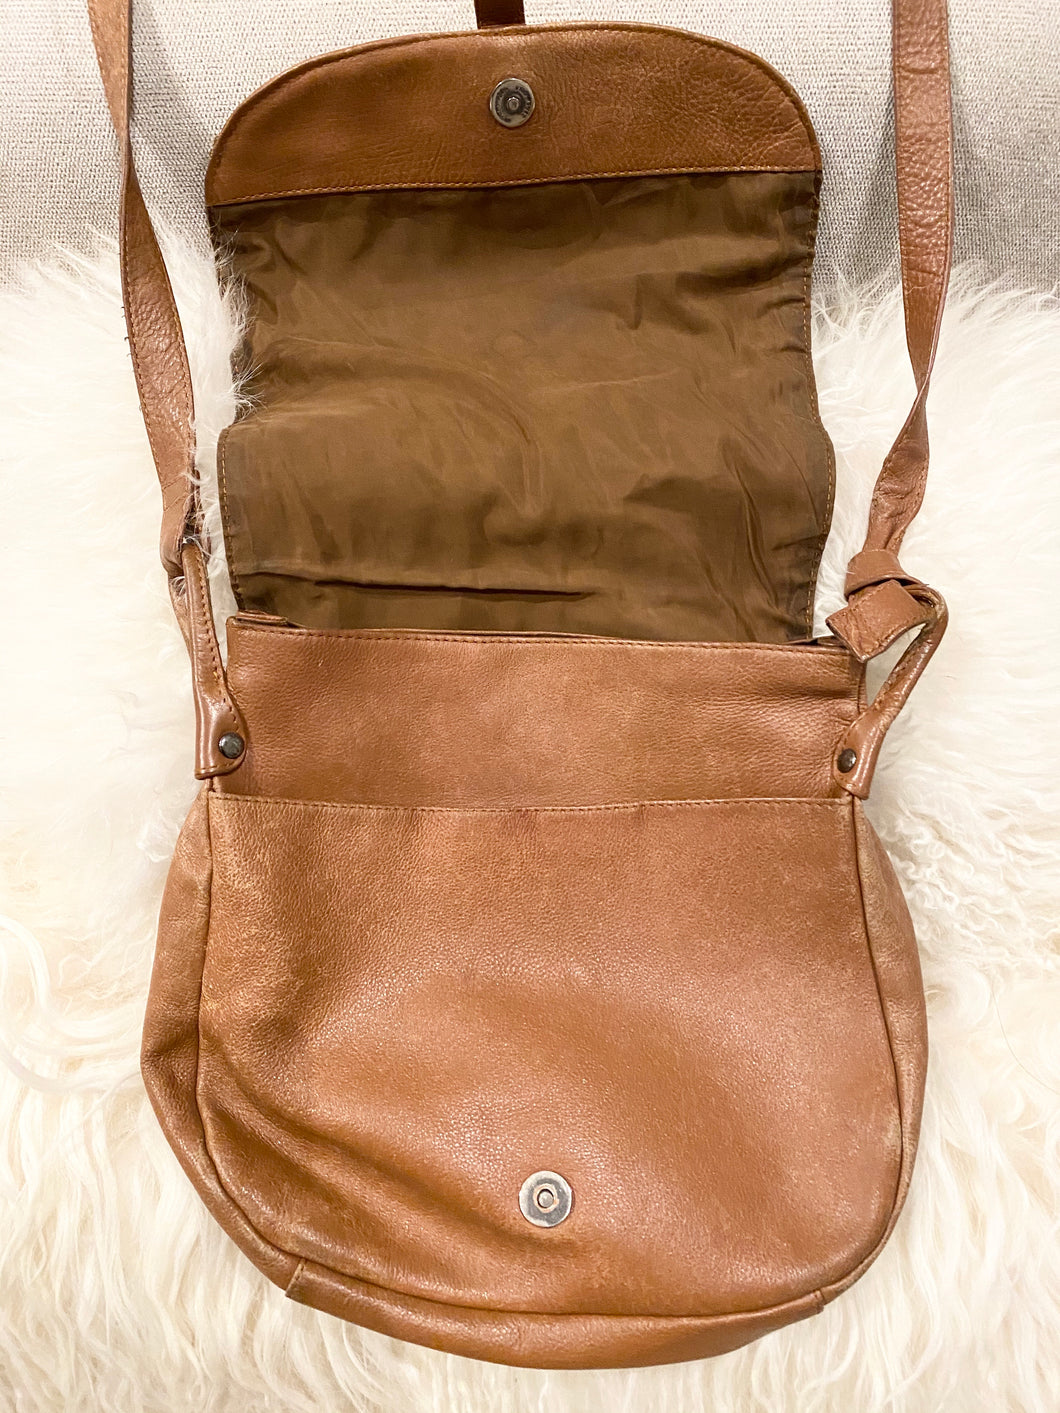 1970's Distressed Handmade Brown Leather Cross Body Bag $29.99 - City Girl Designer Vintage Closet